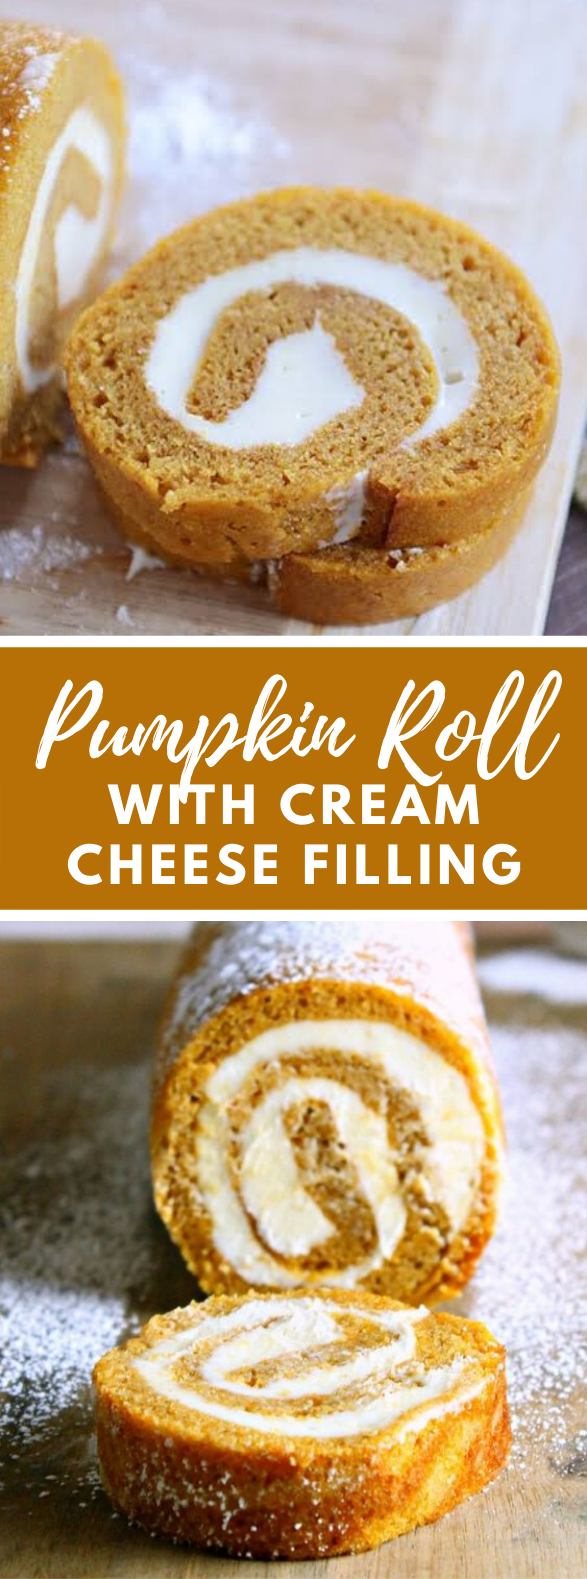 Pumpkin Roll Recipe With Cream Cheese Filling #desserts #fallrecipes